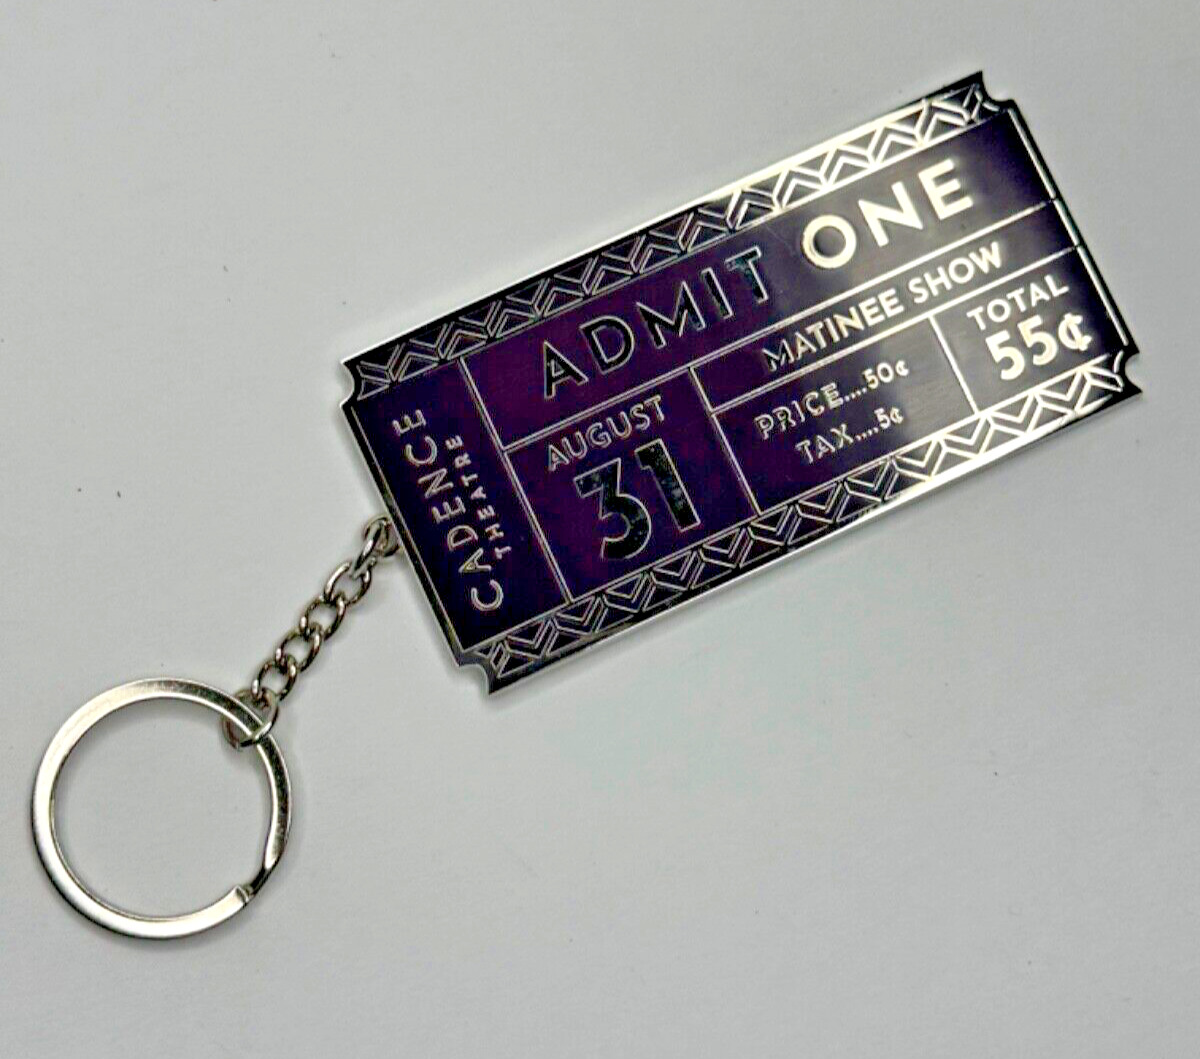 Cadence Theater Keychain Purple silver Ticket Stub Key Fob Hunt A Killer Theater